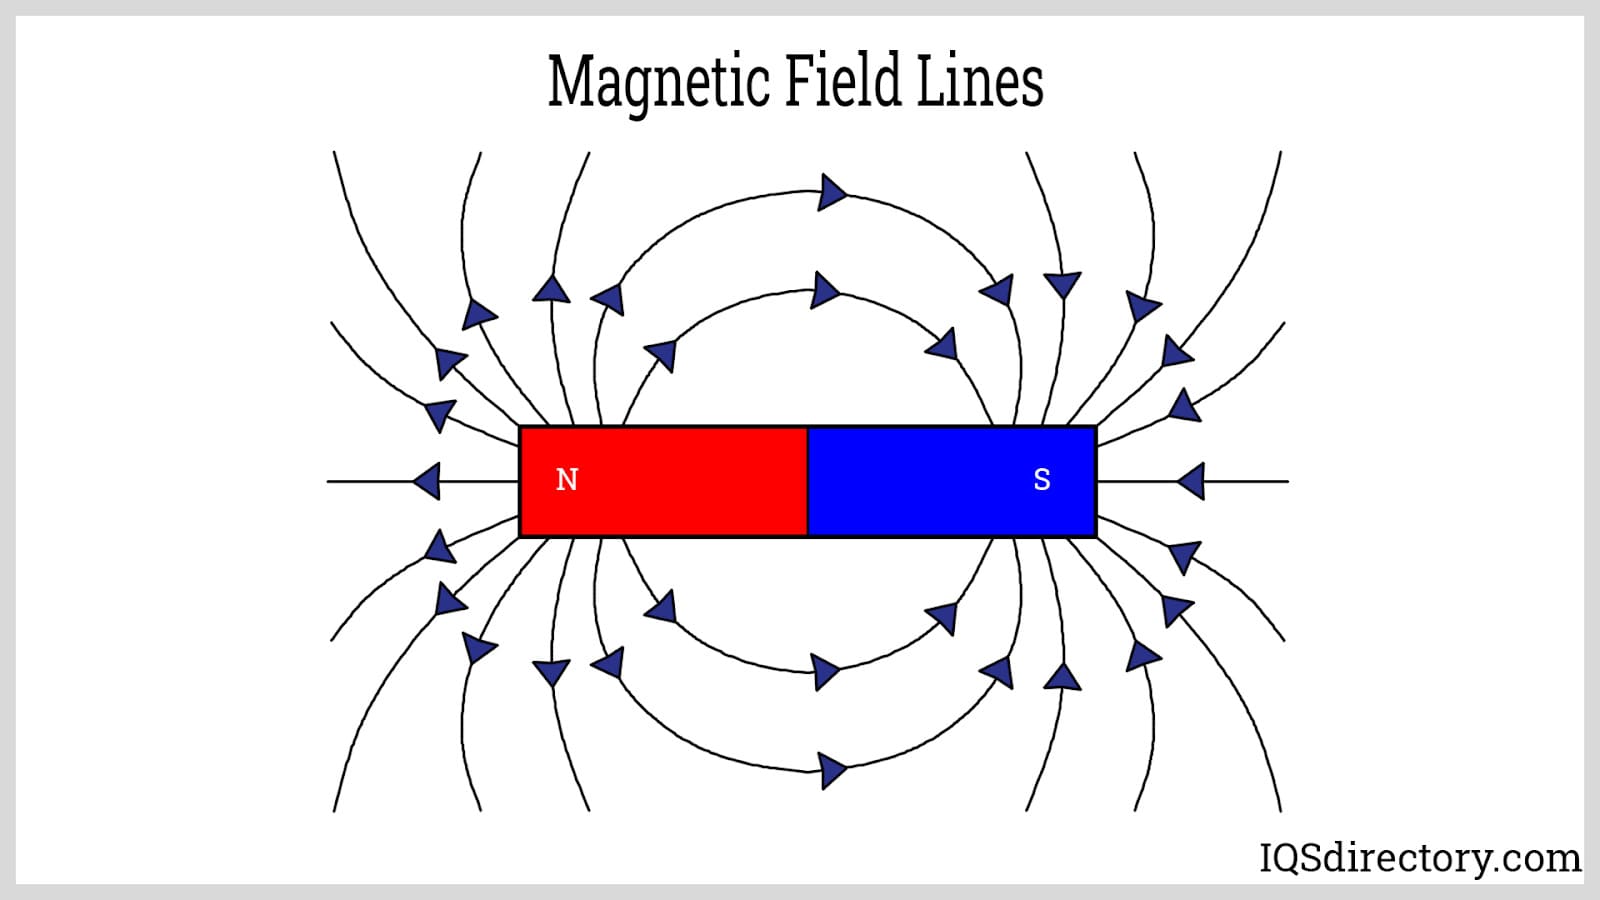 Halbach Array of magnets